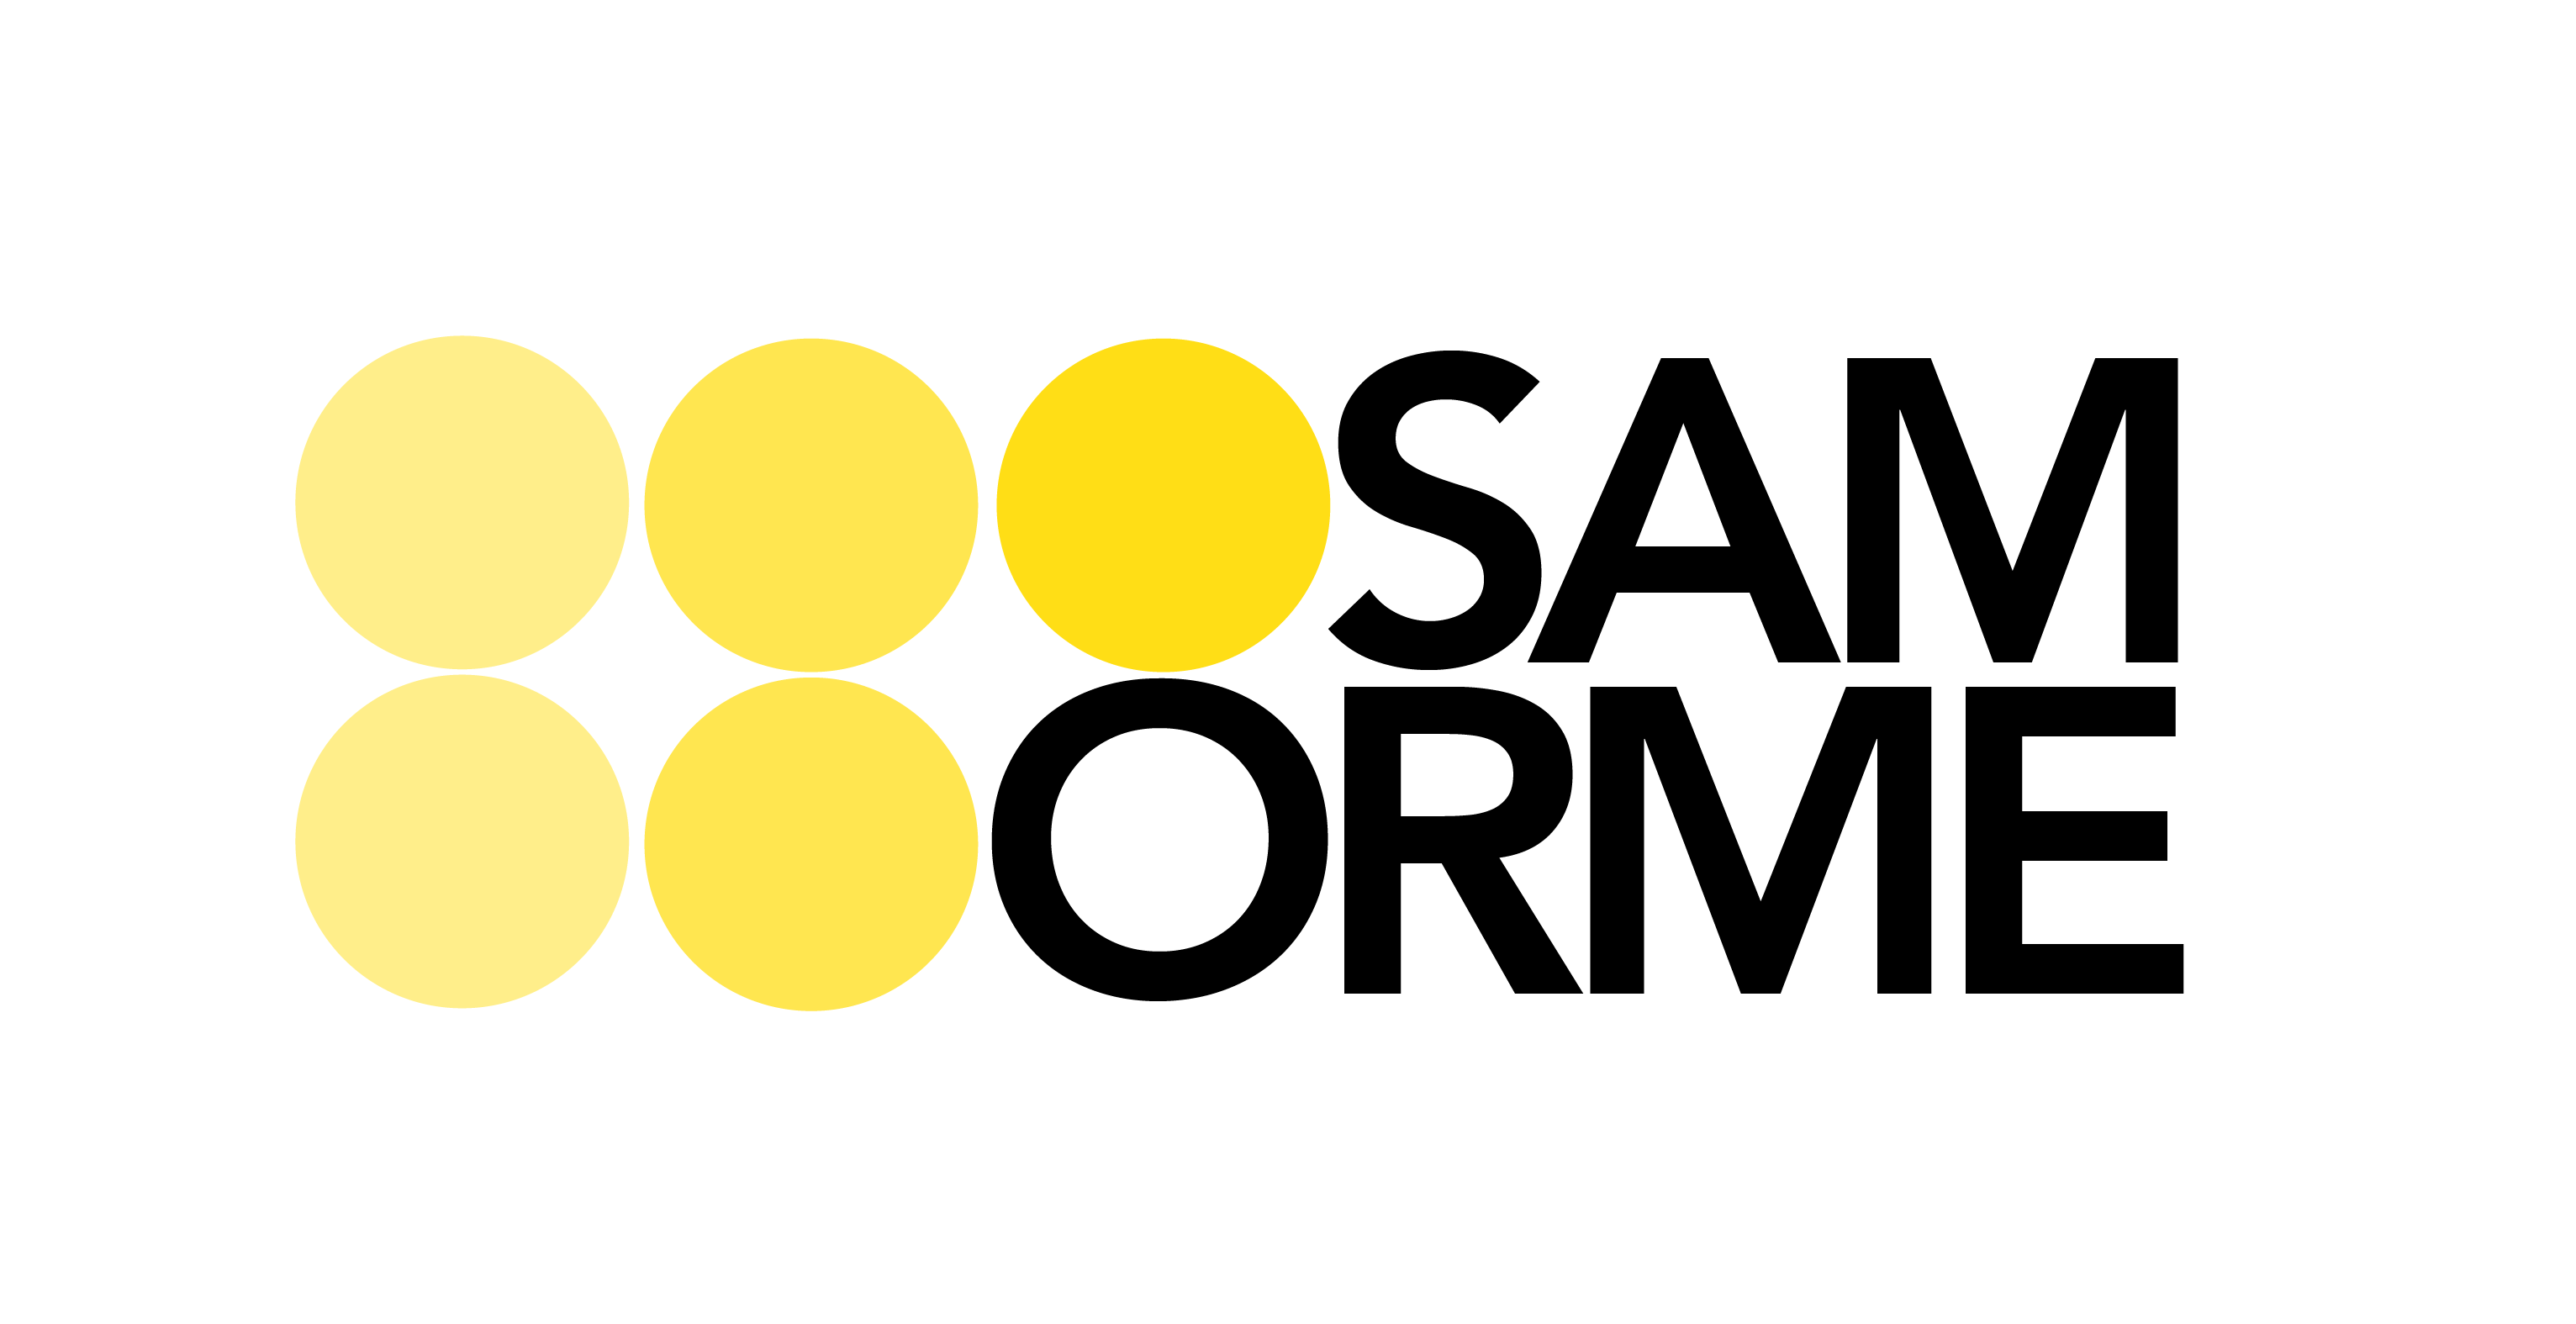 Samuel Orme